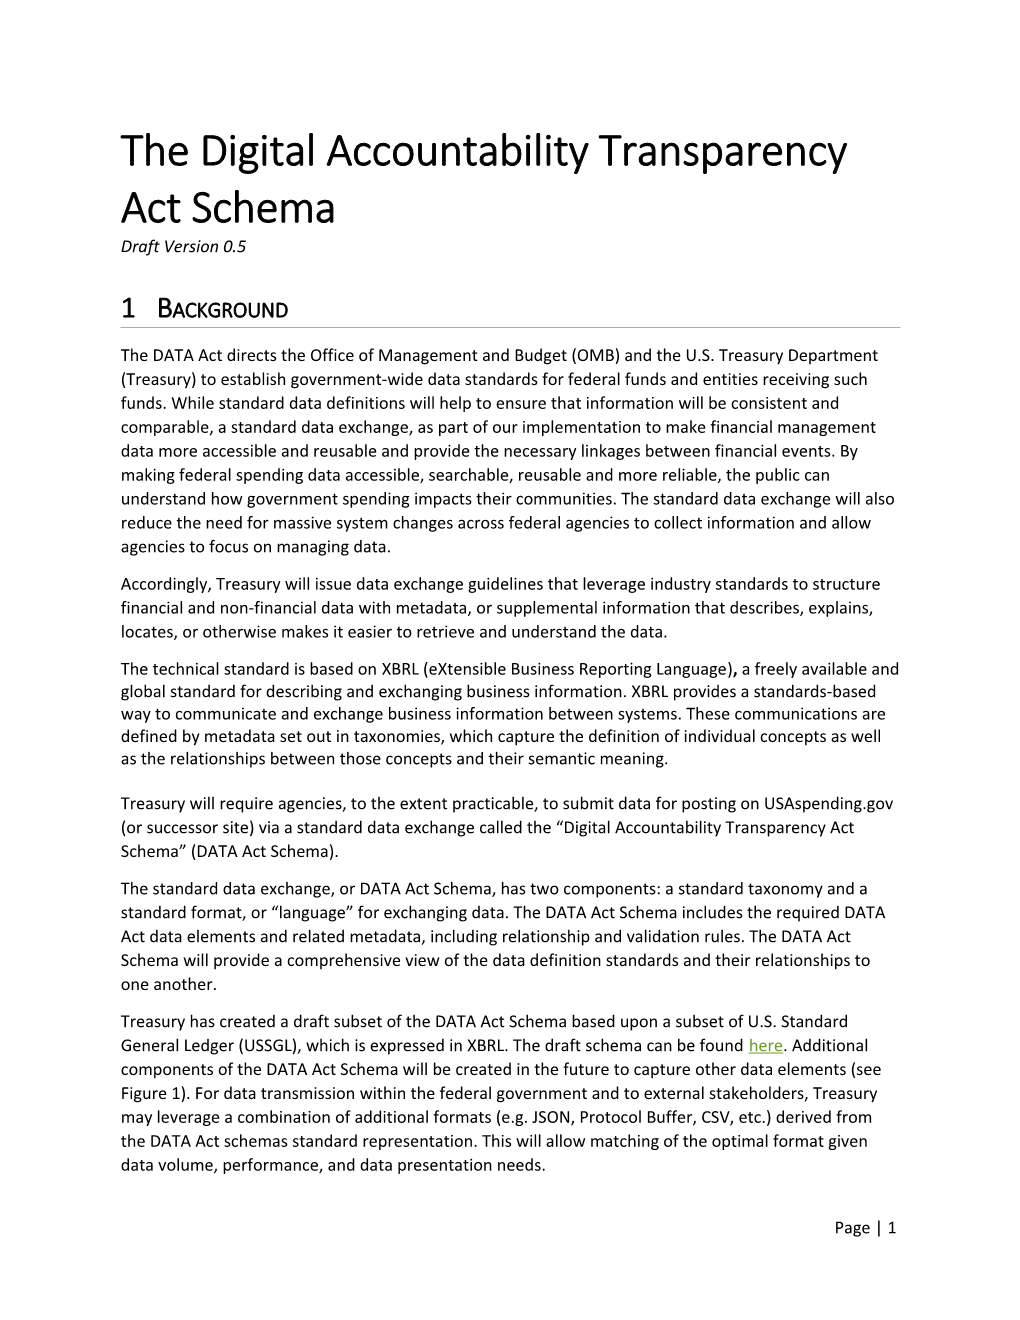 The Digital Accountability Transparency Act Schema